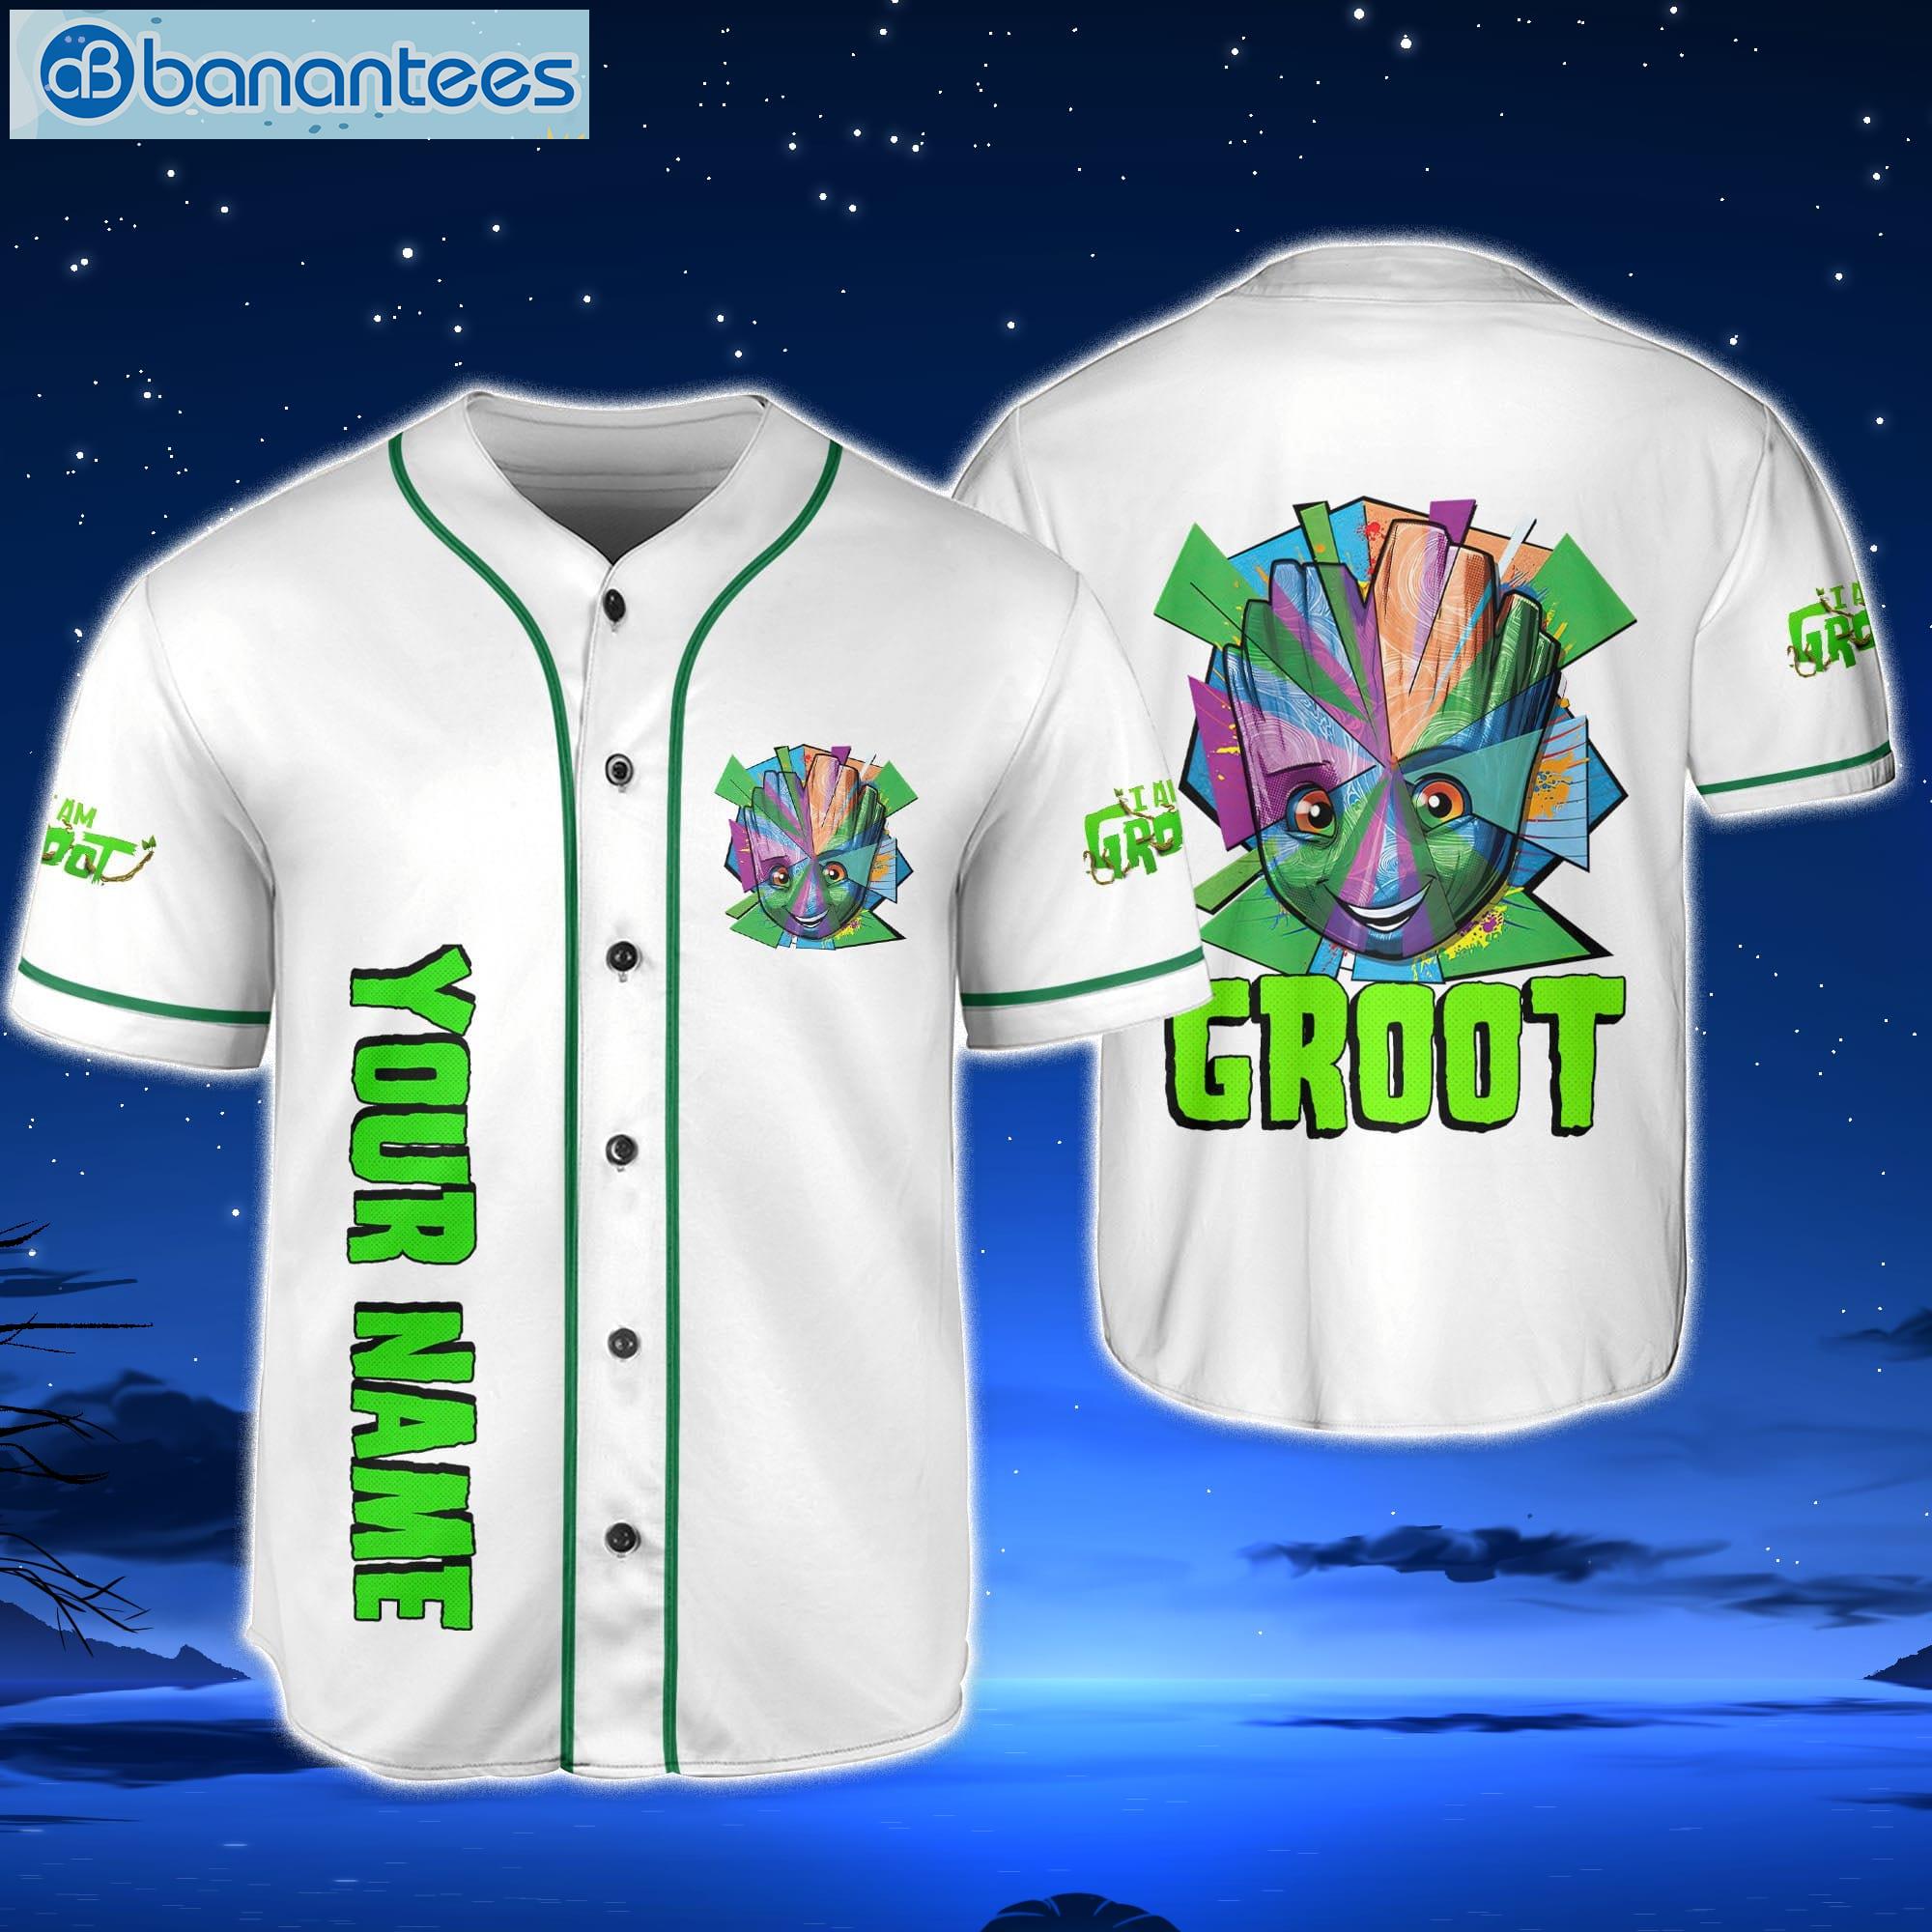 Custom Name For Disney Fans Teenage Gamer Groot Guardian Of The Galaxy  Baseball Jersey Shirt